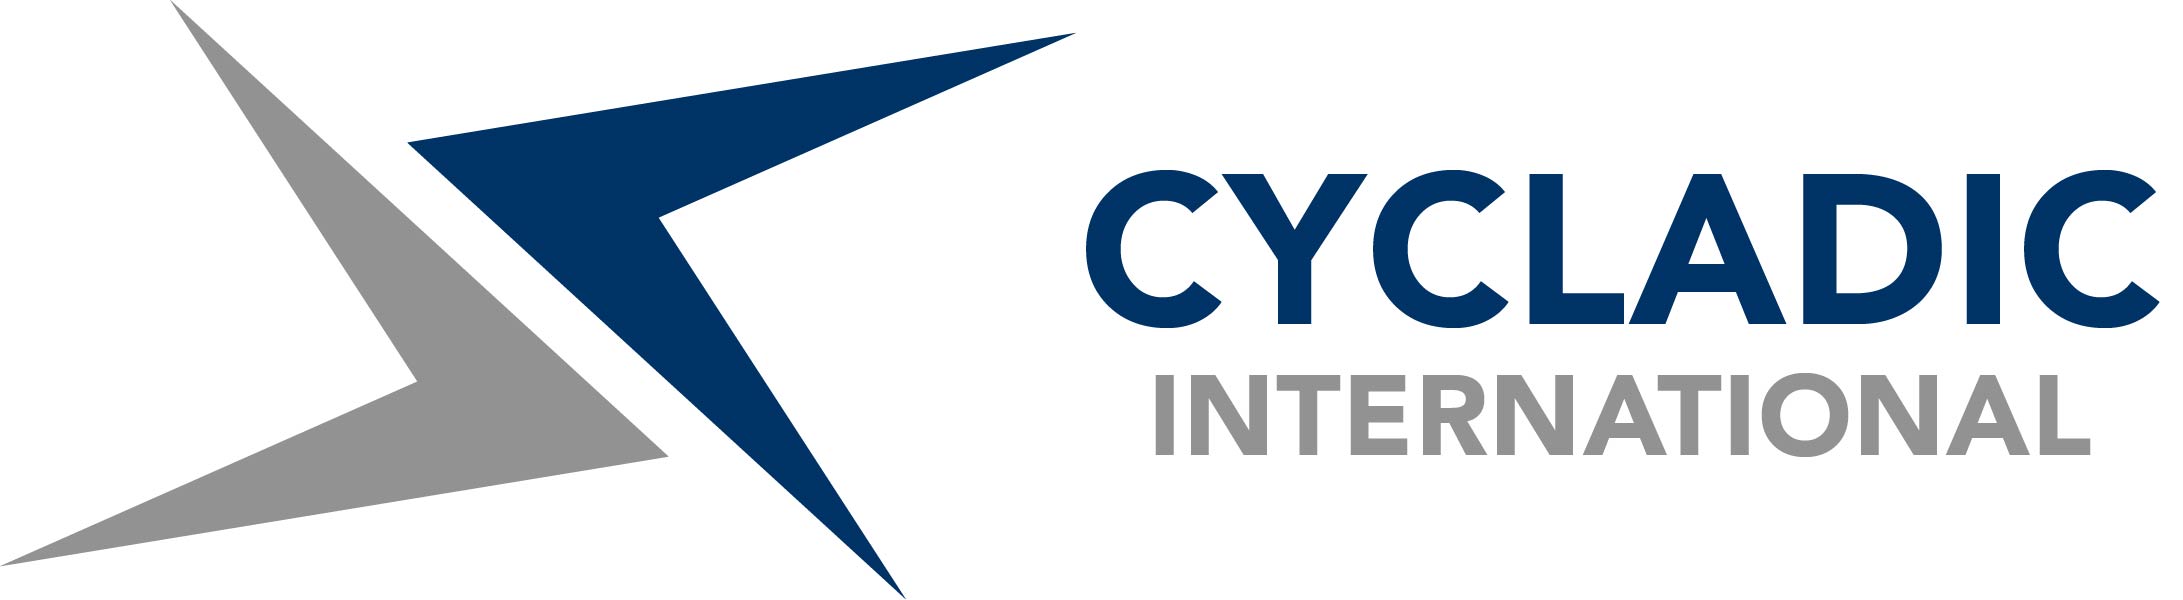 Cyclatic logo Dk Blue 1